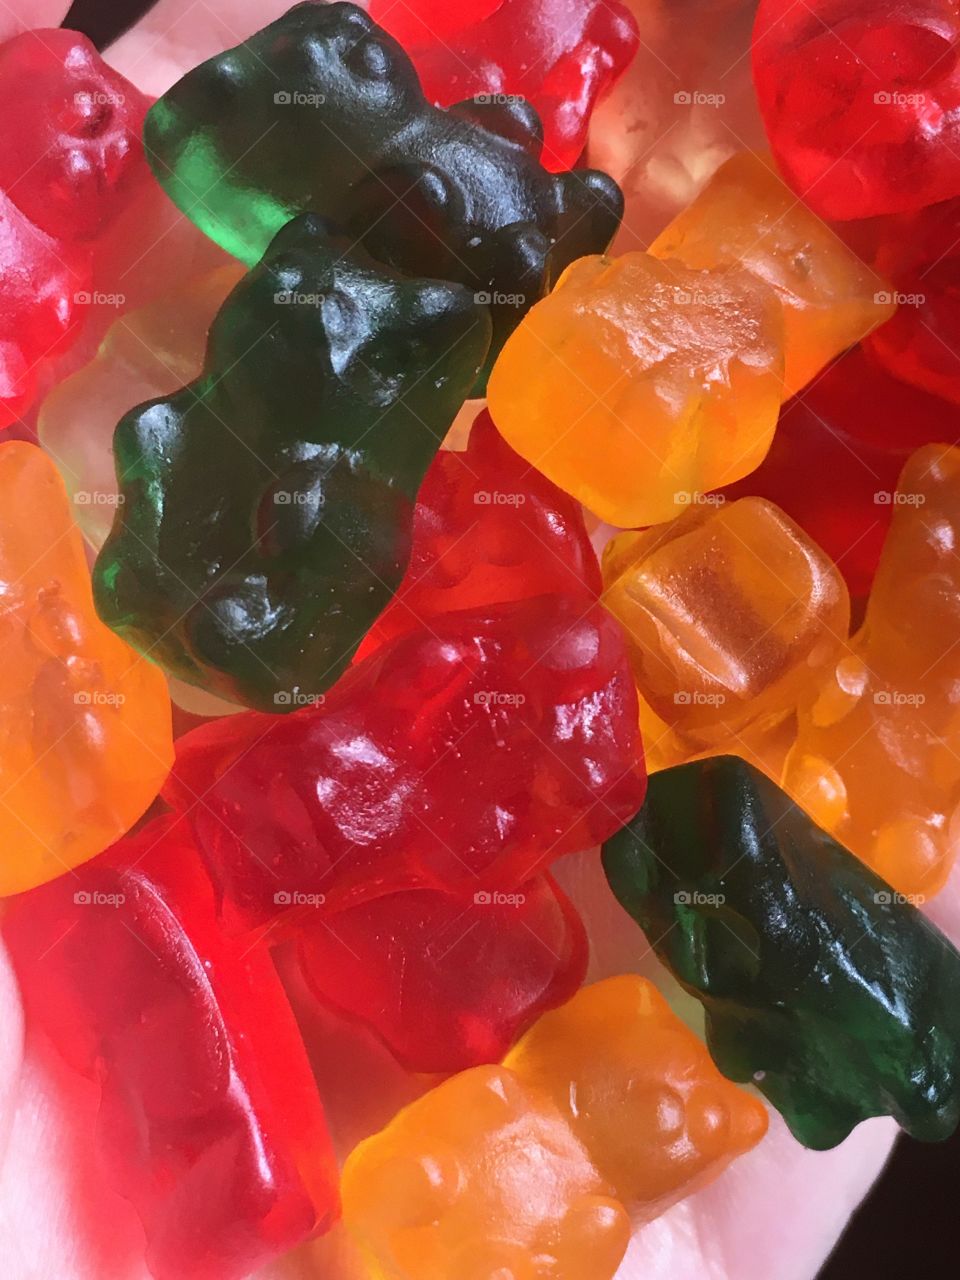 We’re all Gummy Bears